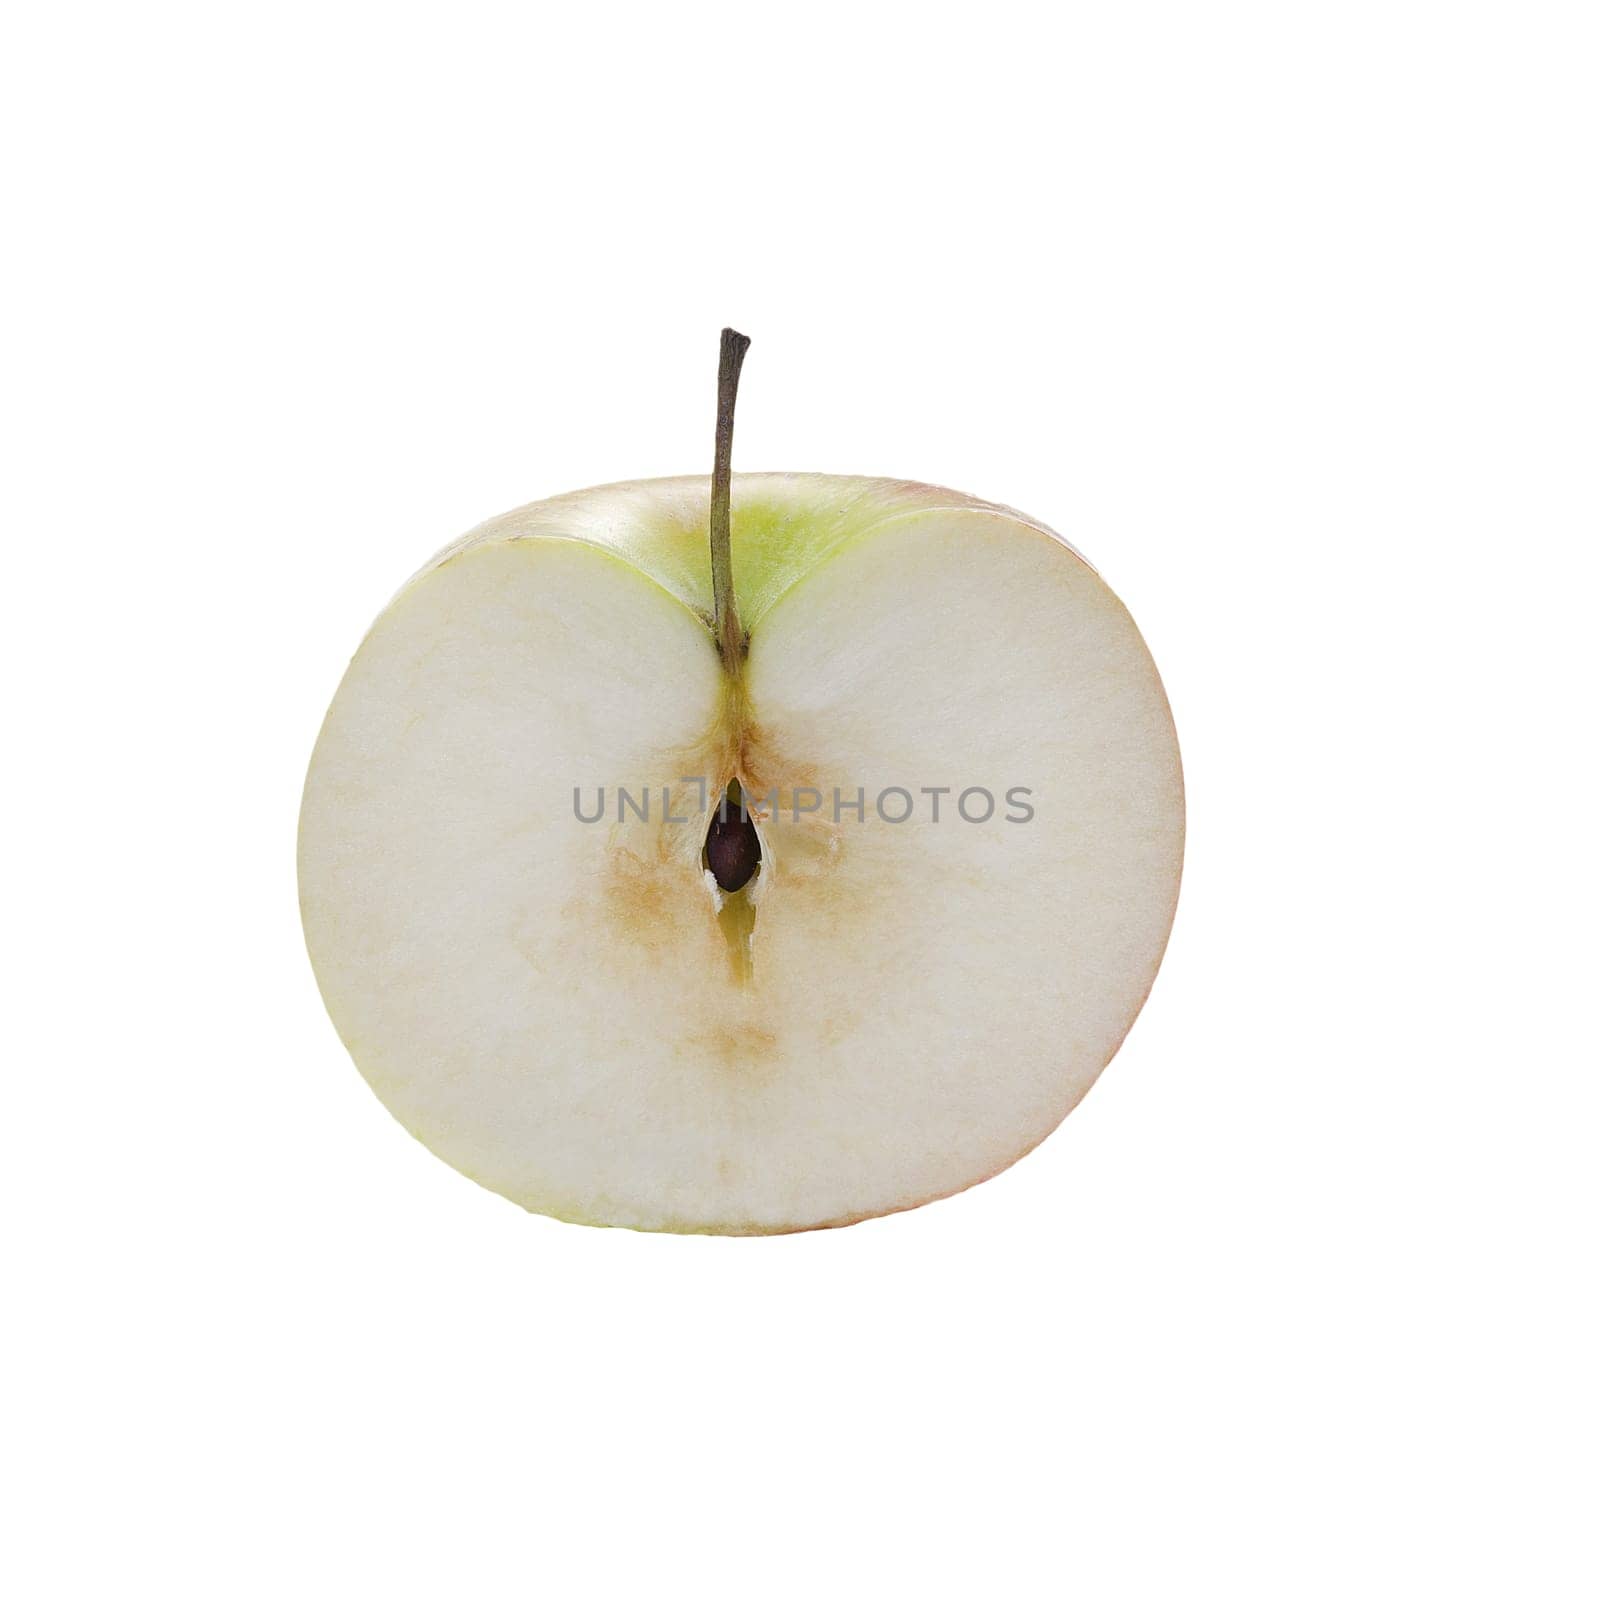 A cut apple by sergiodv